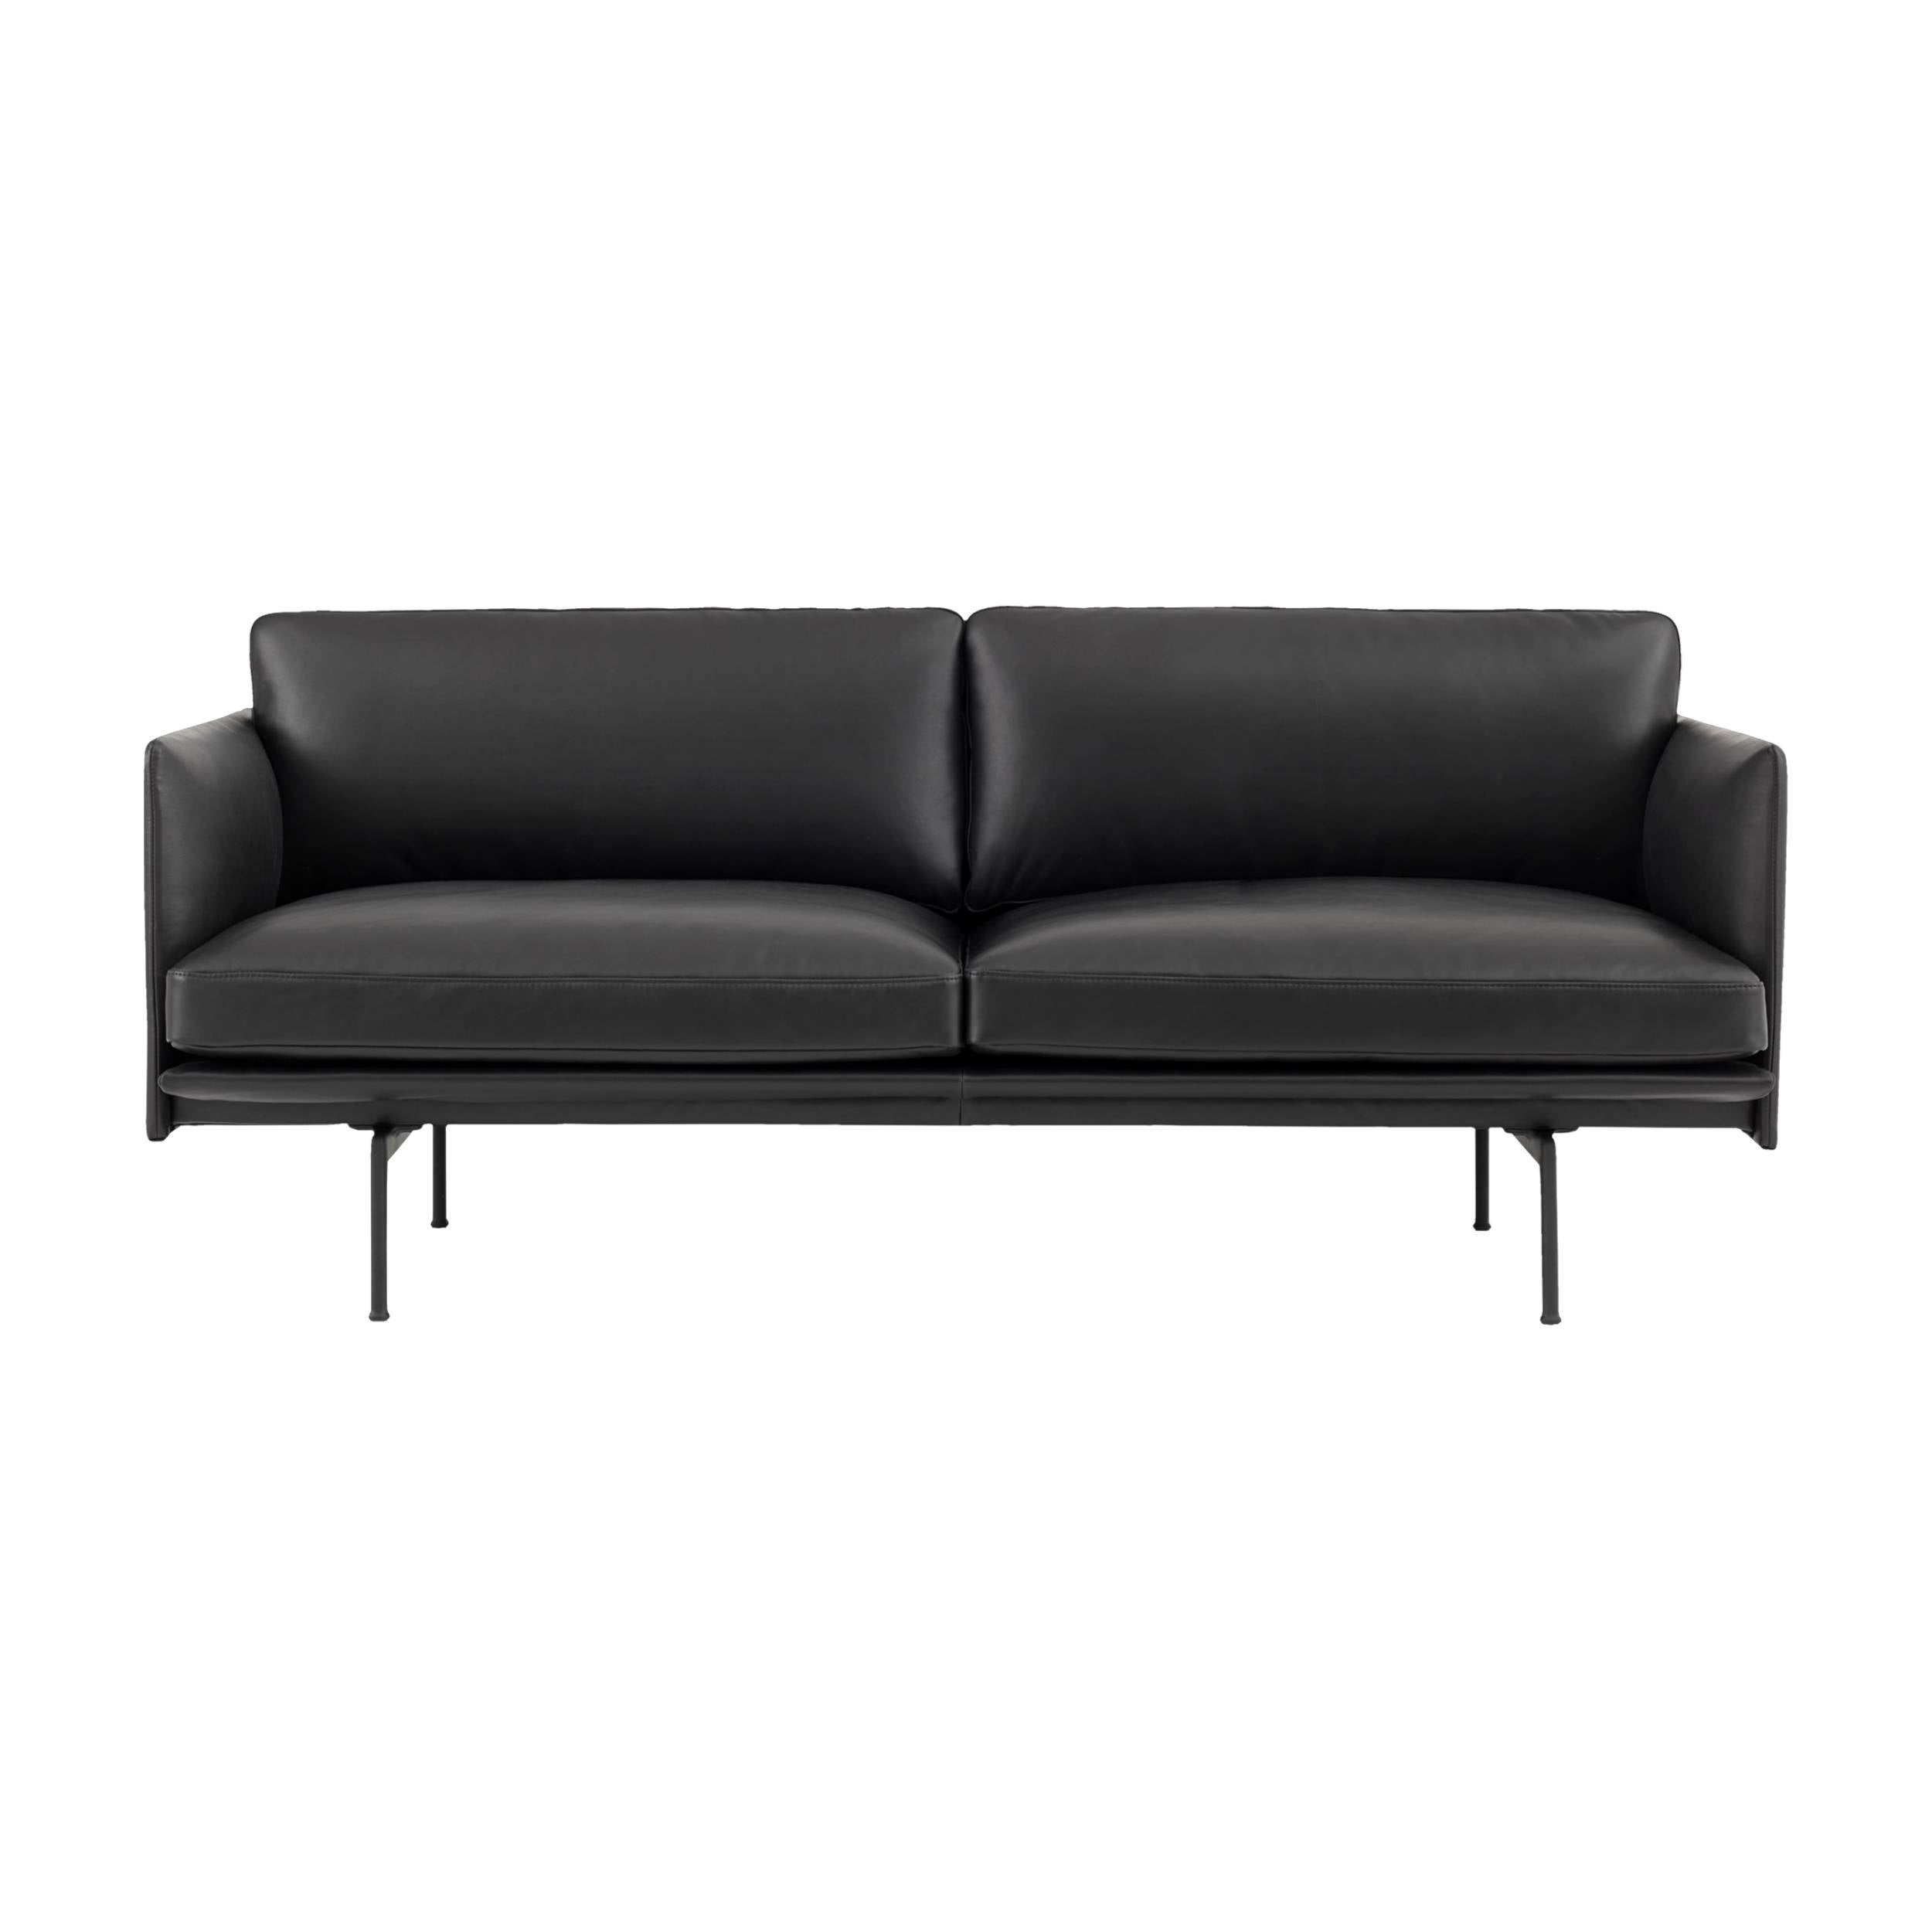 Outline Studio Sofa: Black